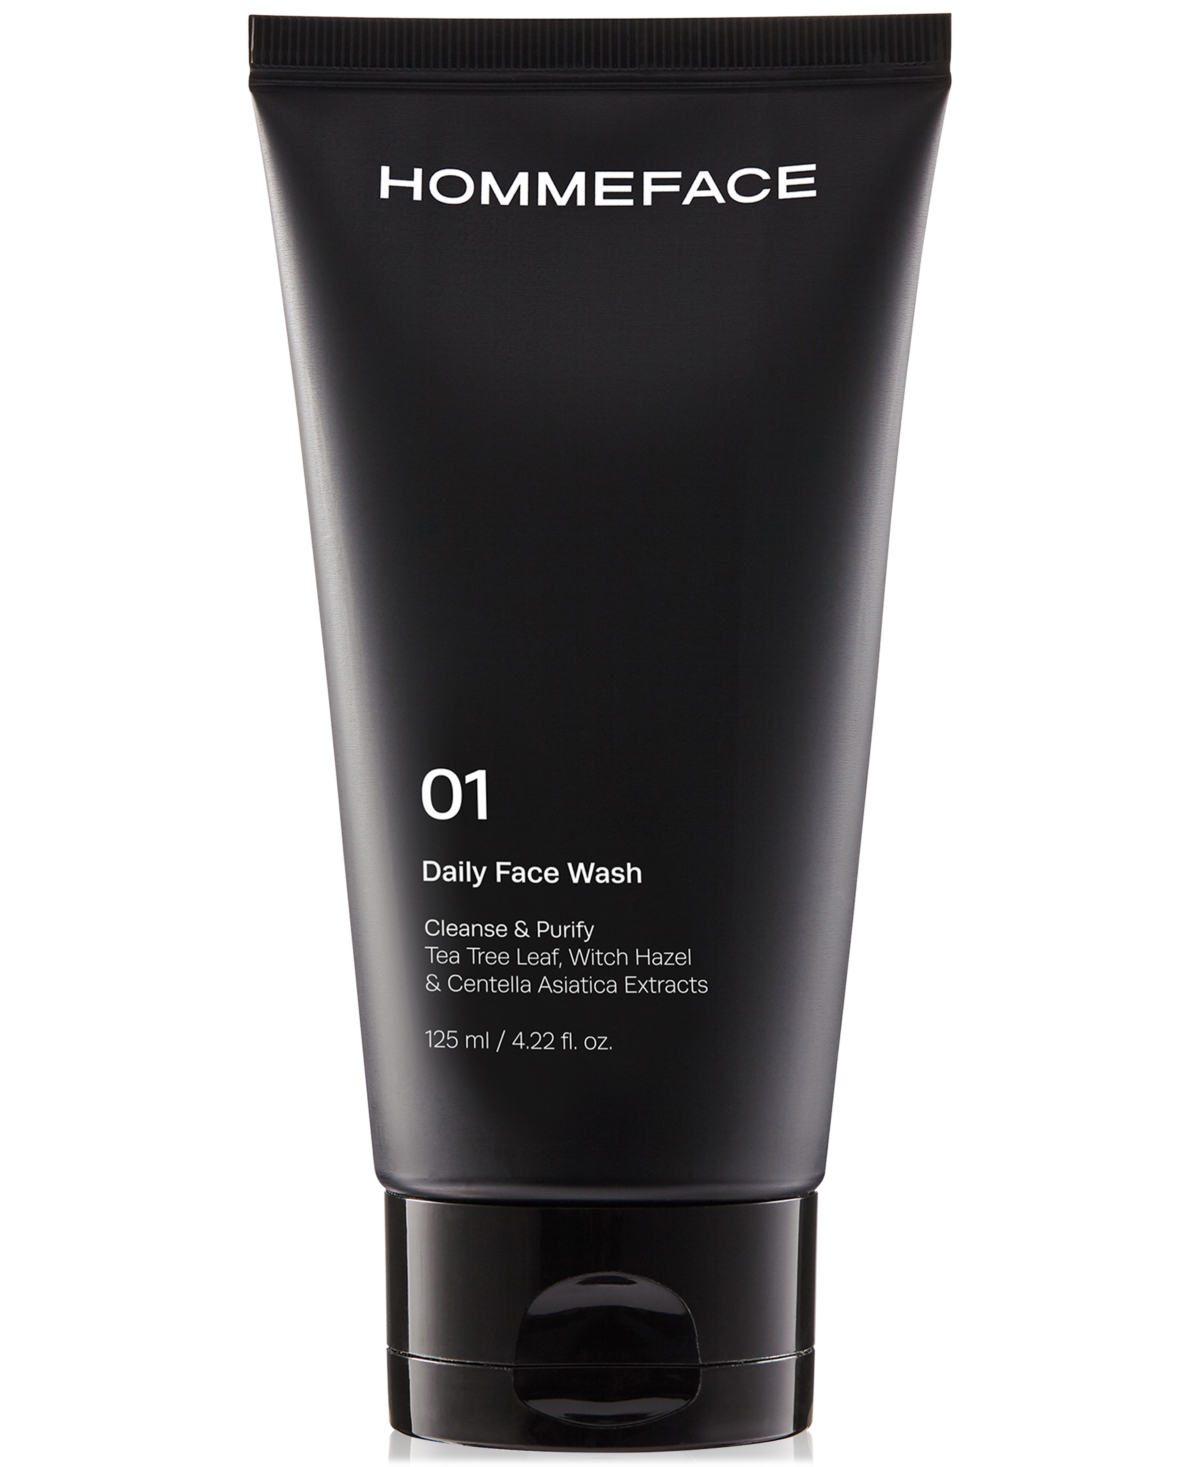 Daily Face Wash For Men, 4.22 oz. - Black